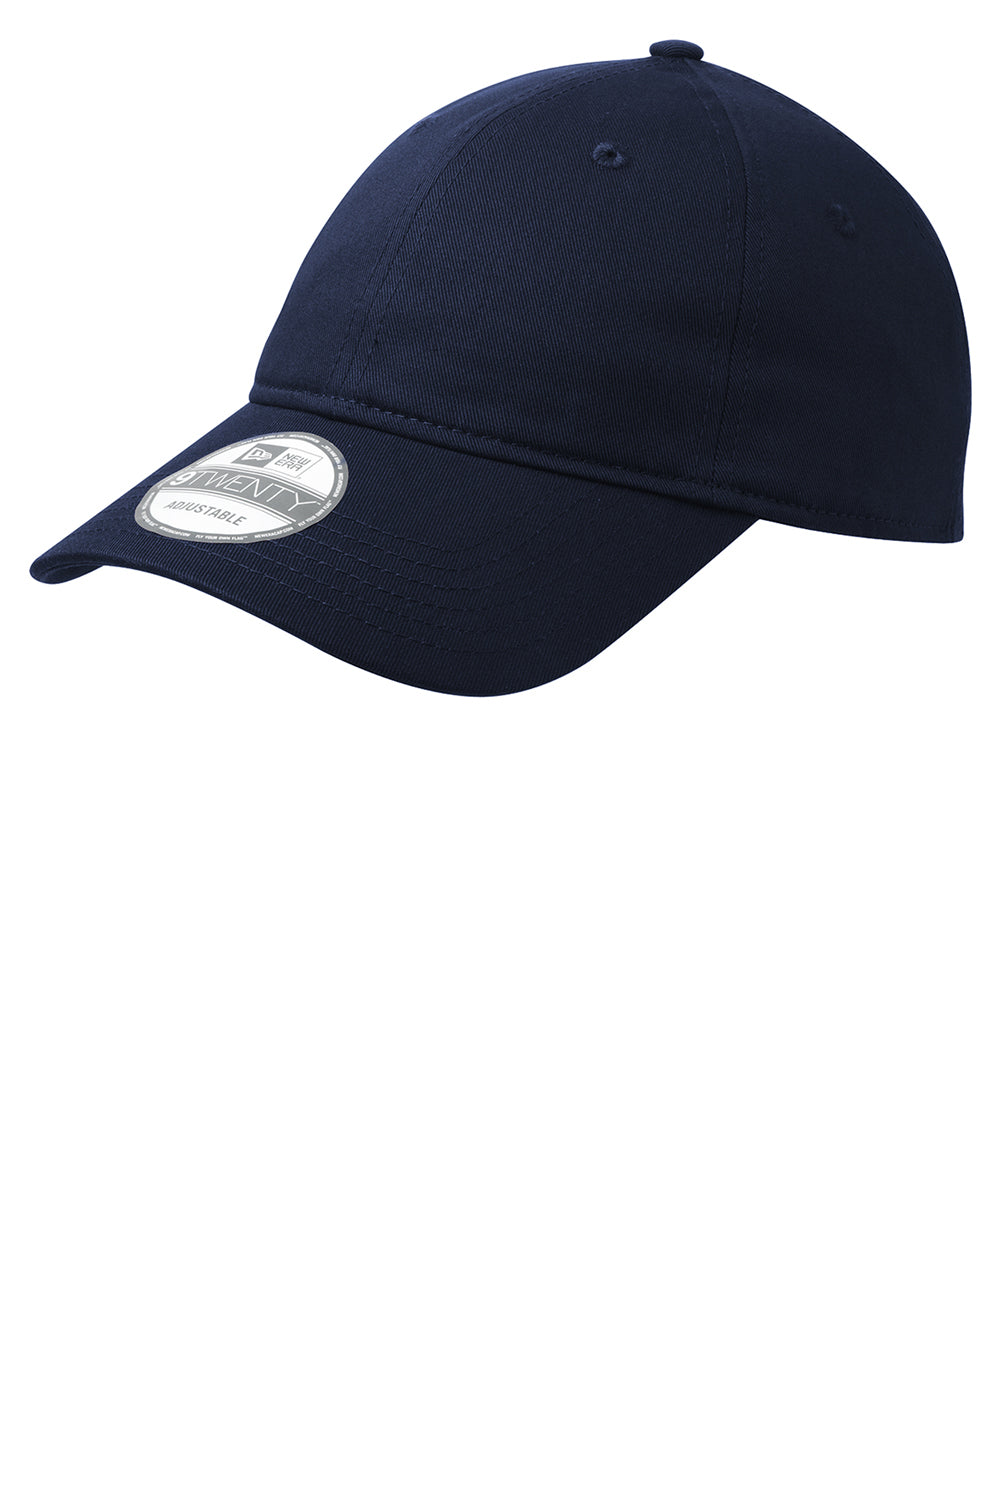 New Era NE201 Mens Adjustable Hat Navy Blue Front